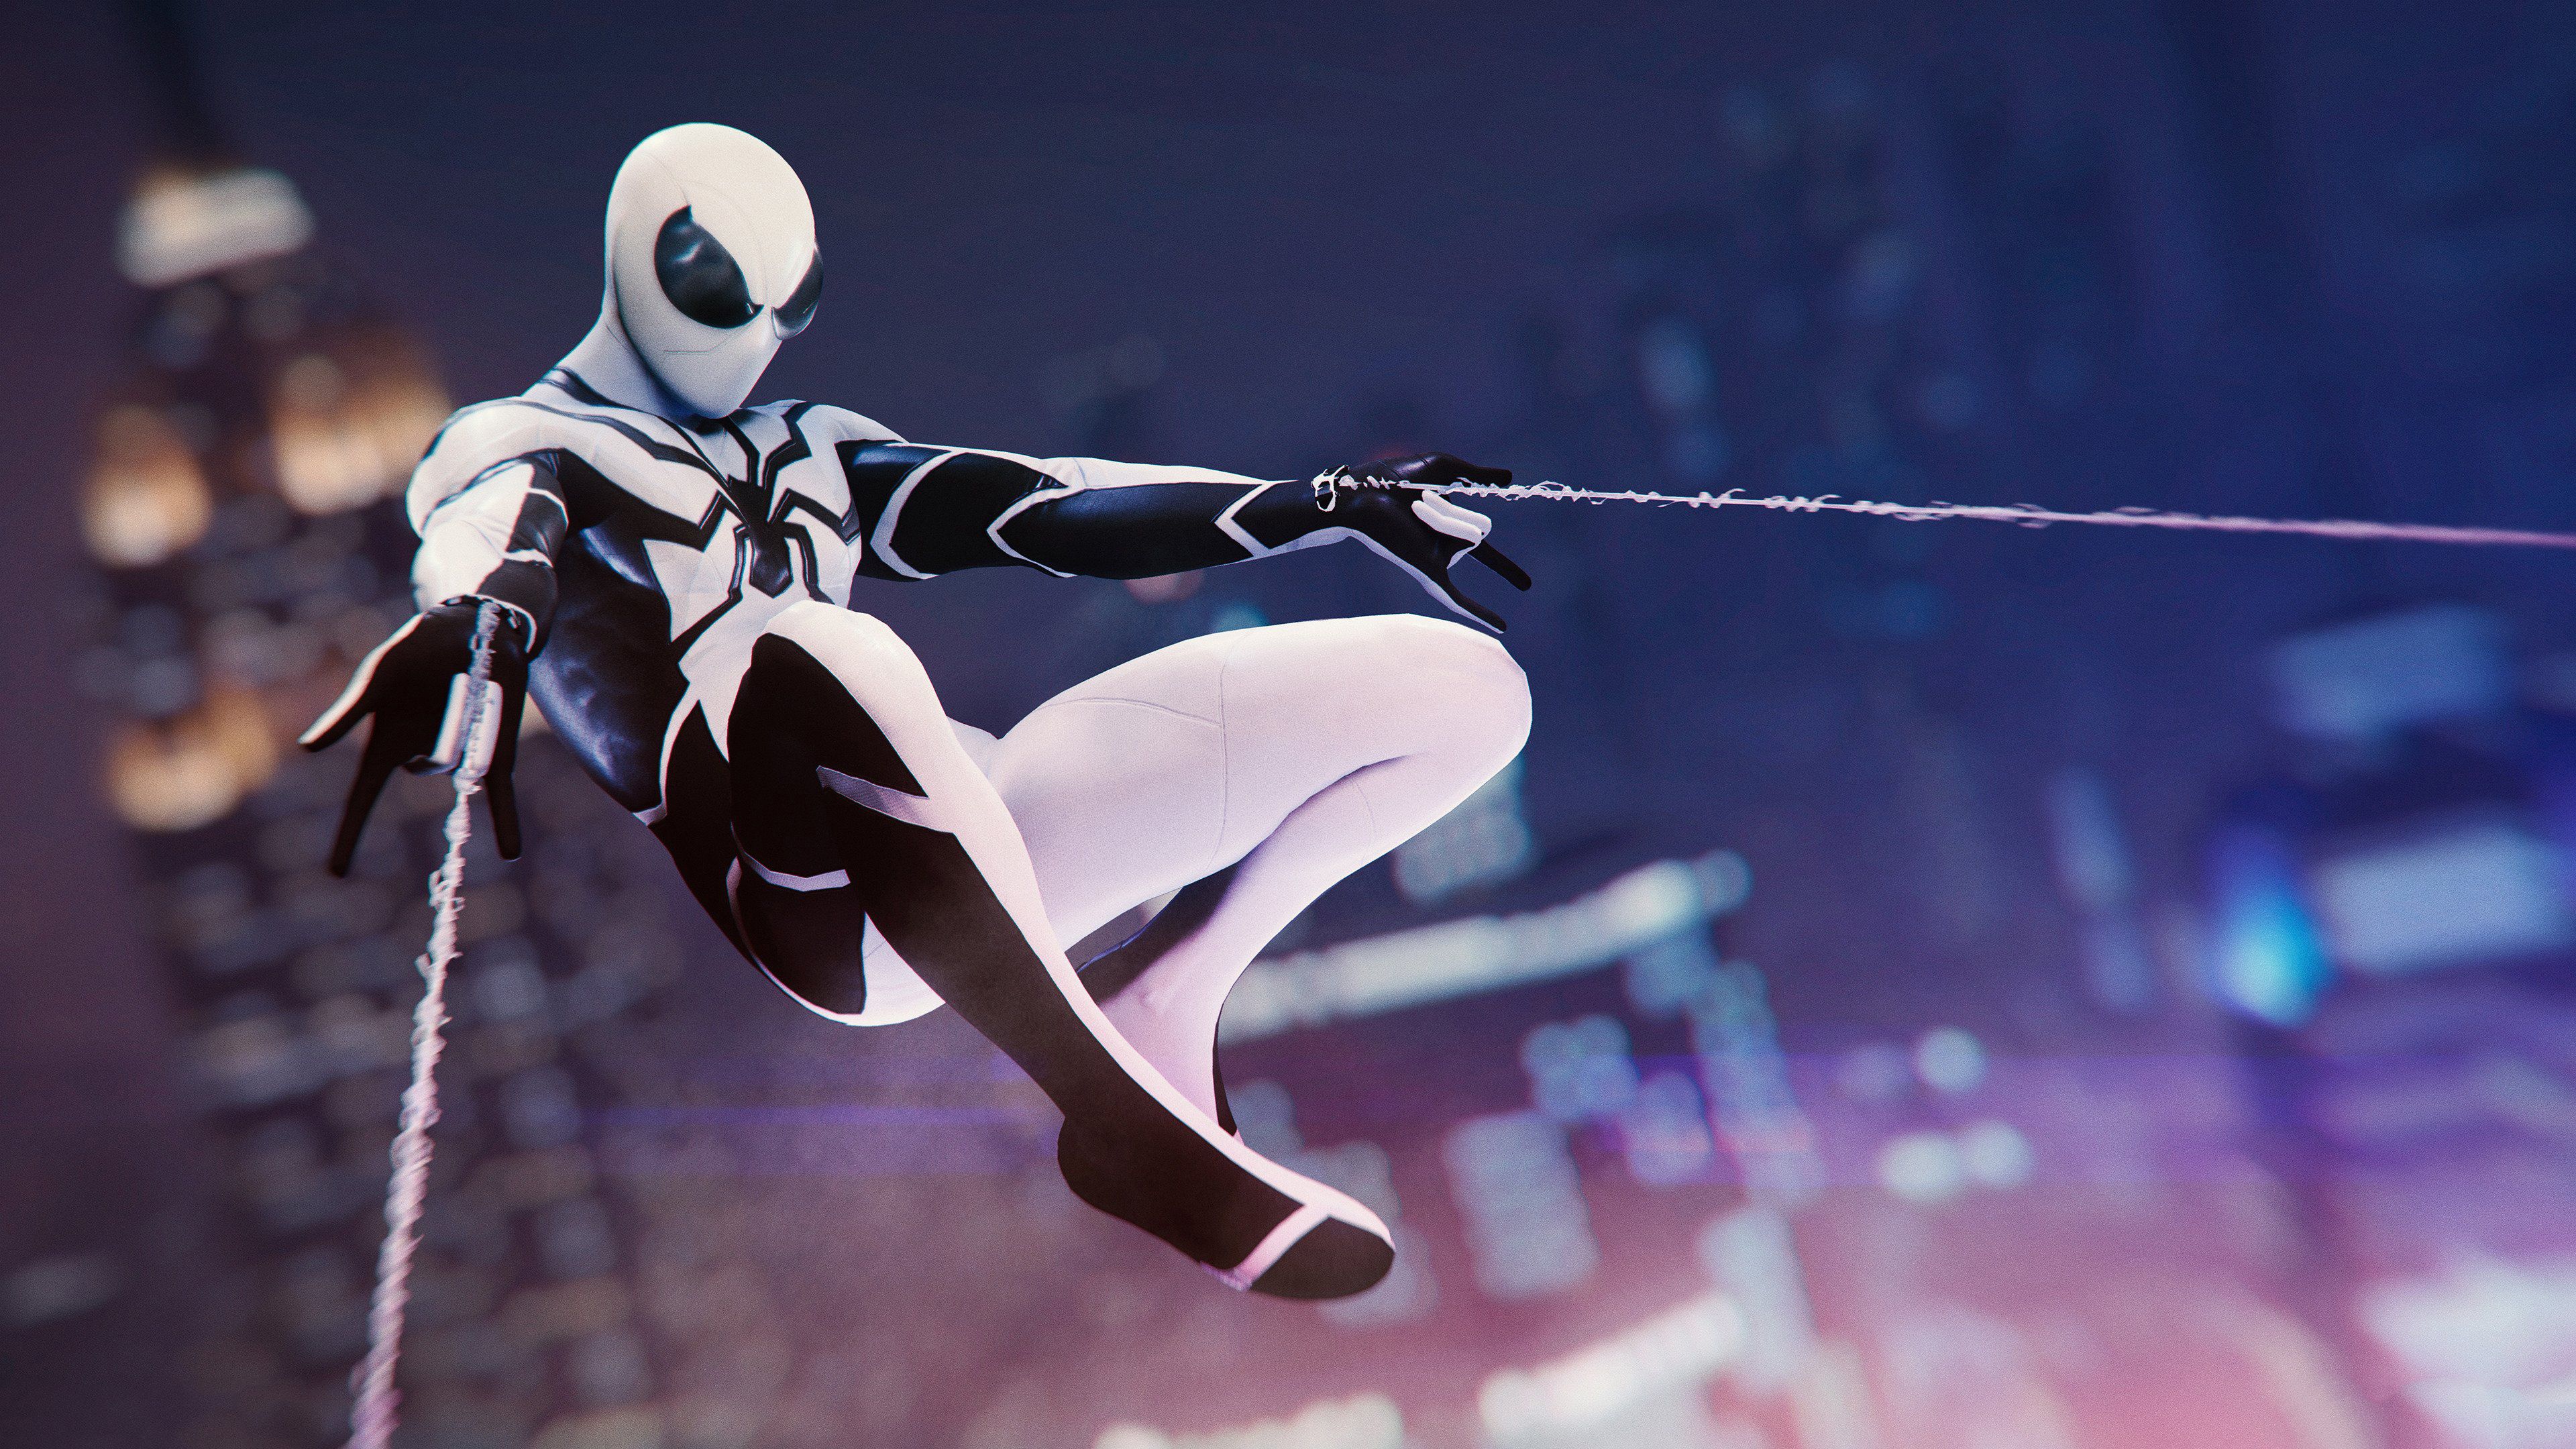 Spiderman Ps4 New Suit, HD Games, 4k Wallpaper, Image